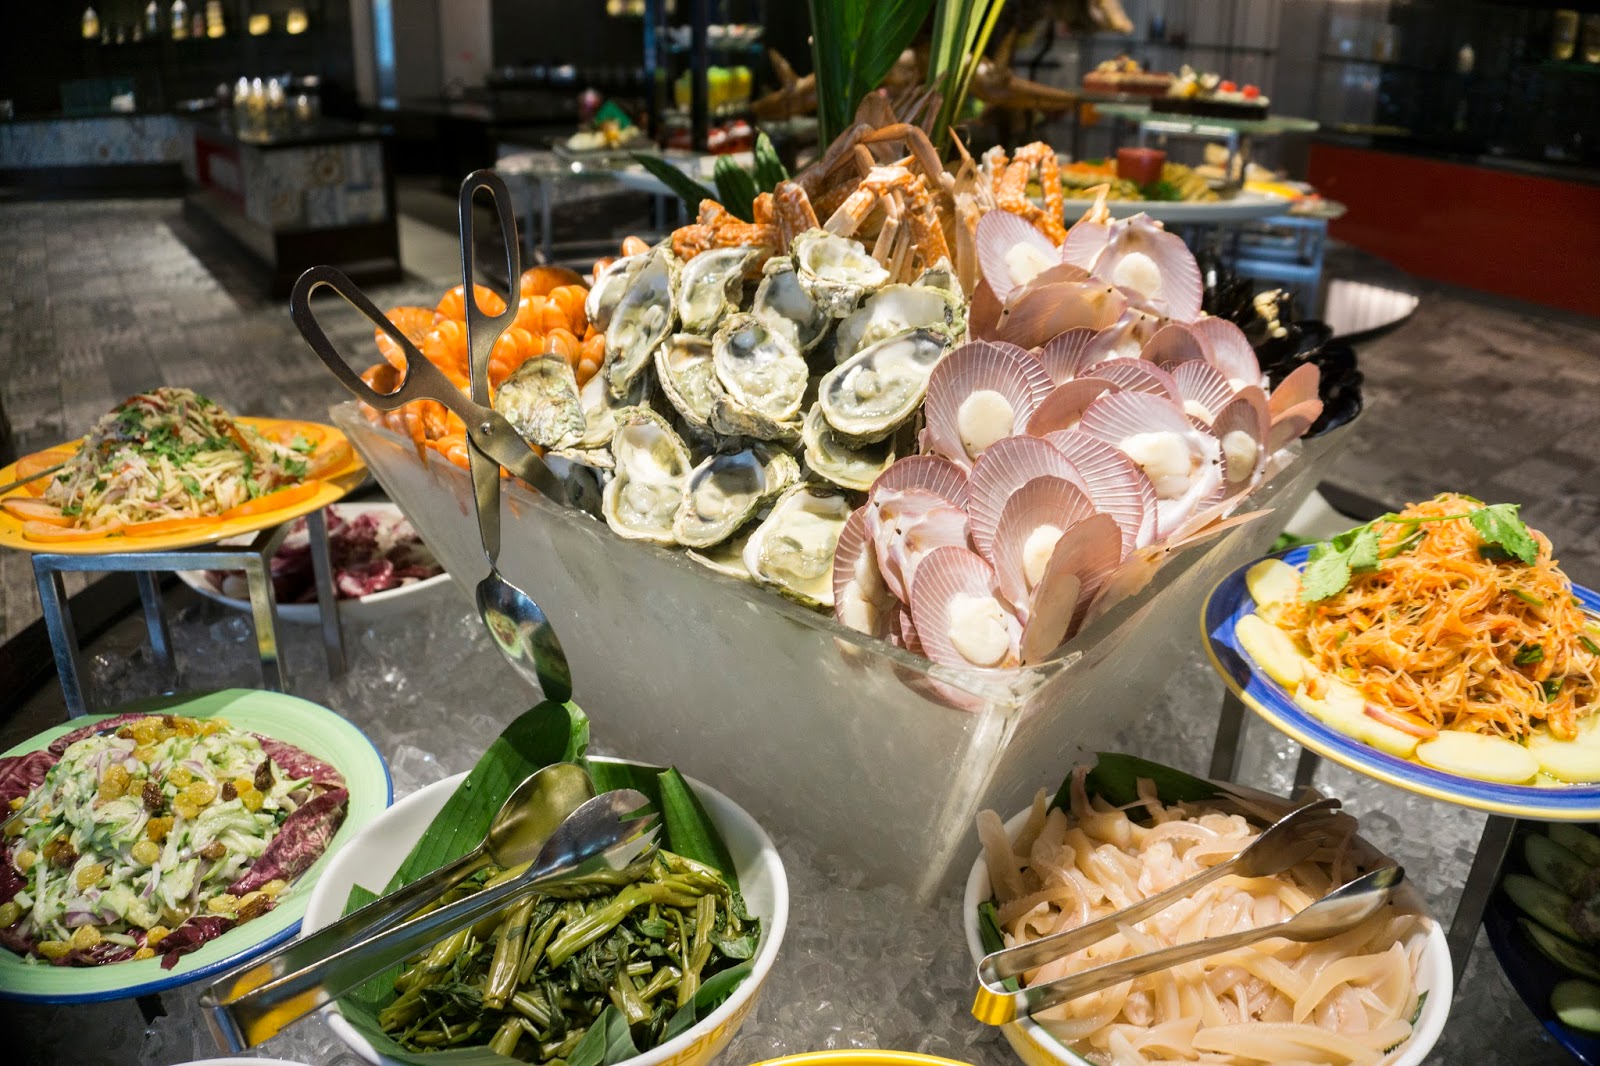 Seafood Delight Dinner Buffet @ Nada Lama, Hotel Equatorial, Penang